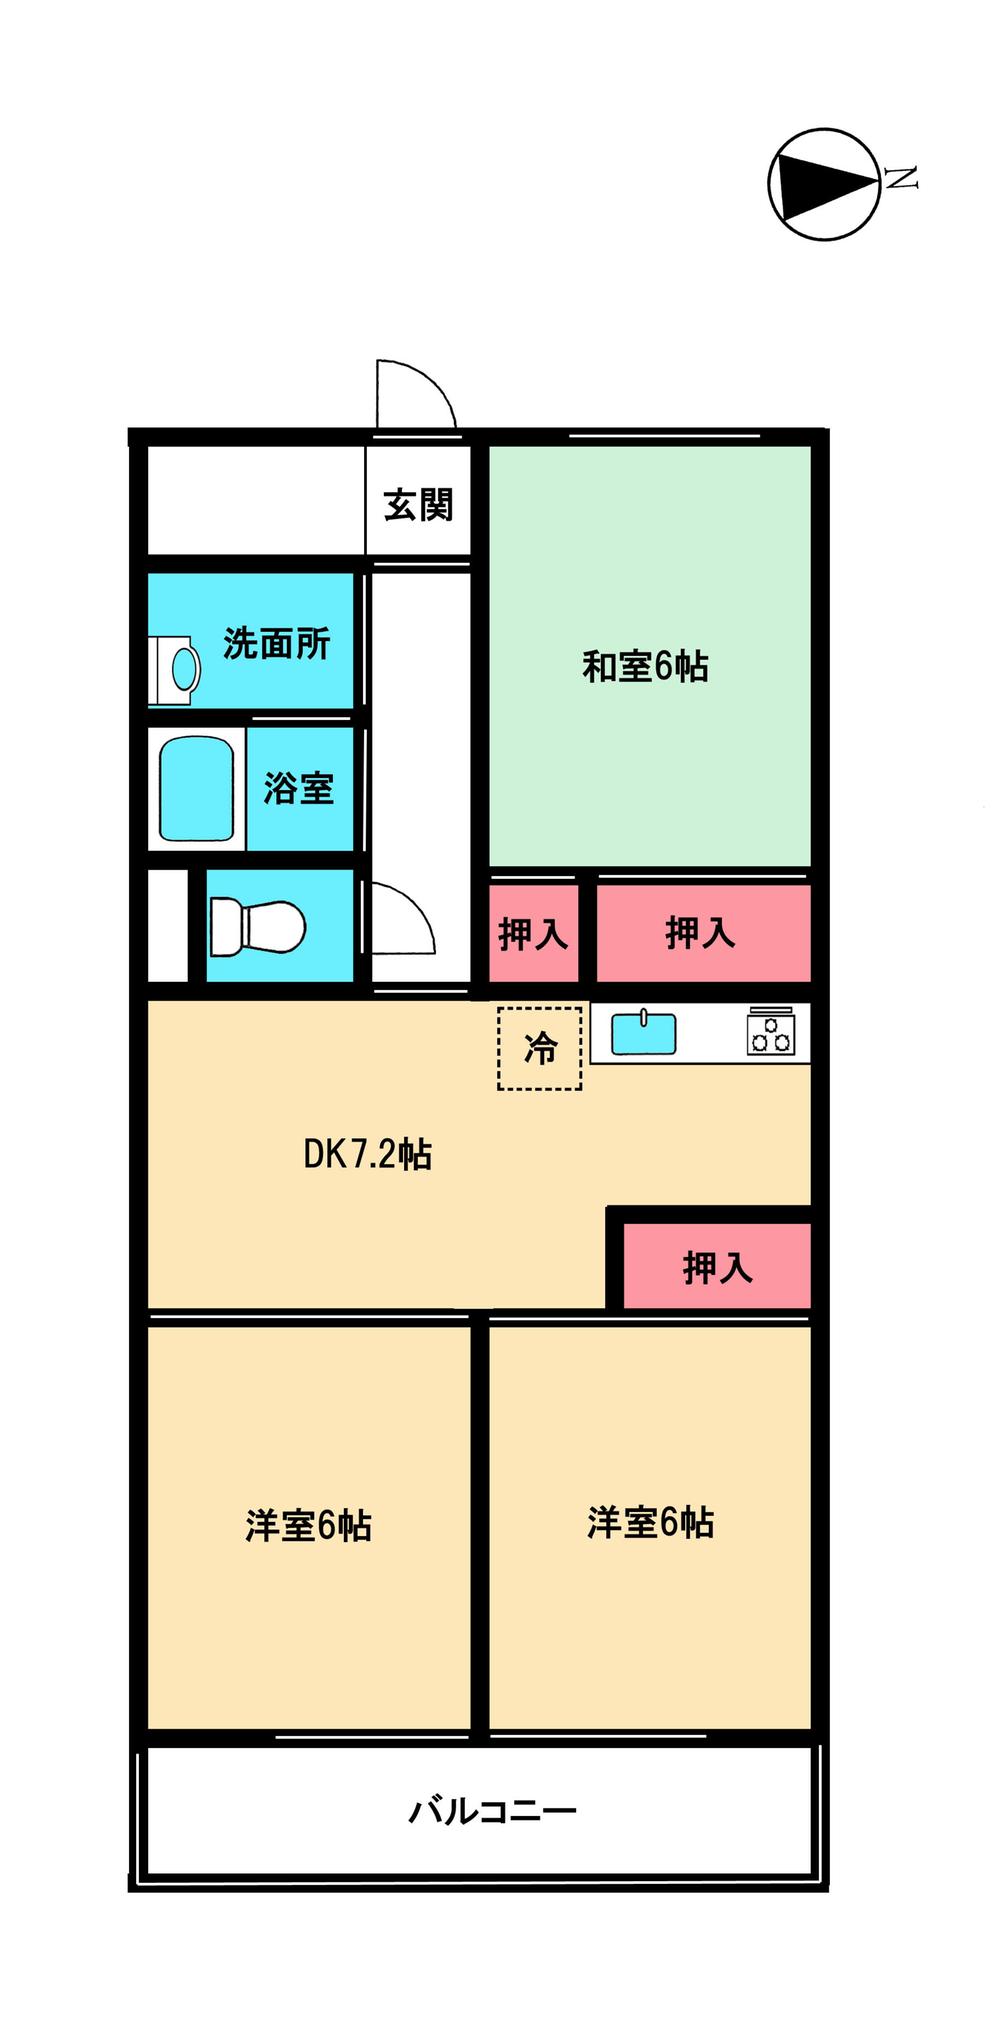 Floor plan. 3DK, Price 9.7 million yen, Occupied area 60.44 sq m , Balcony area 7.28 sq m